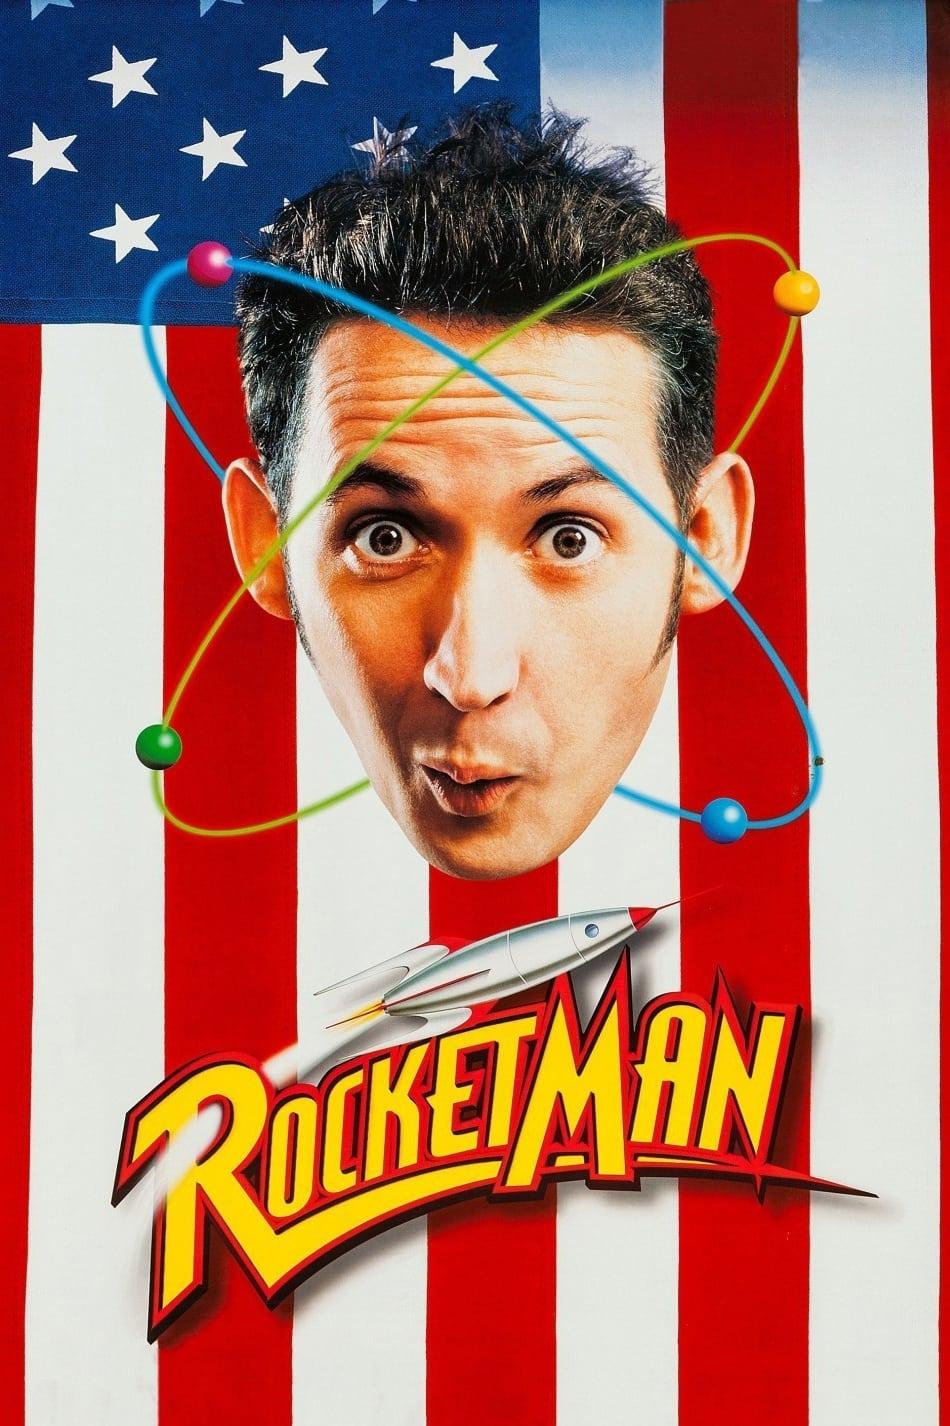 RocketMan poster